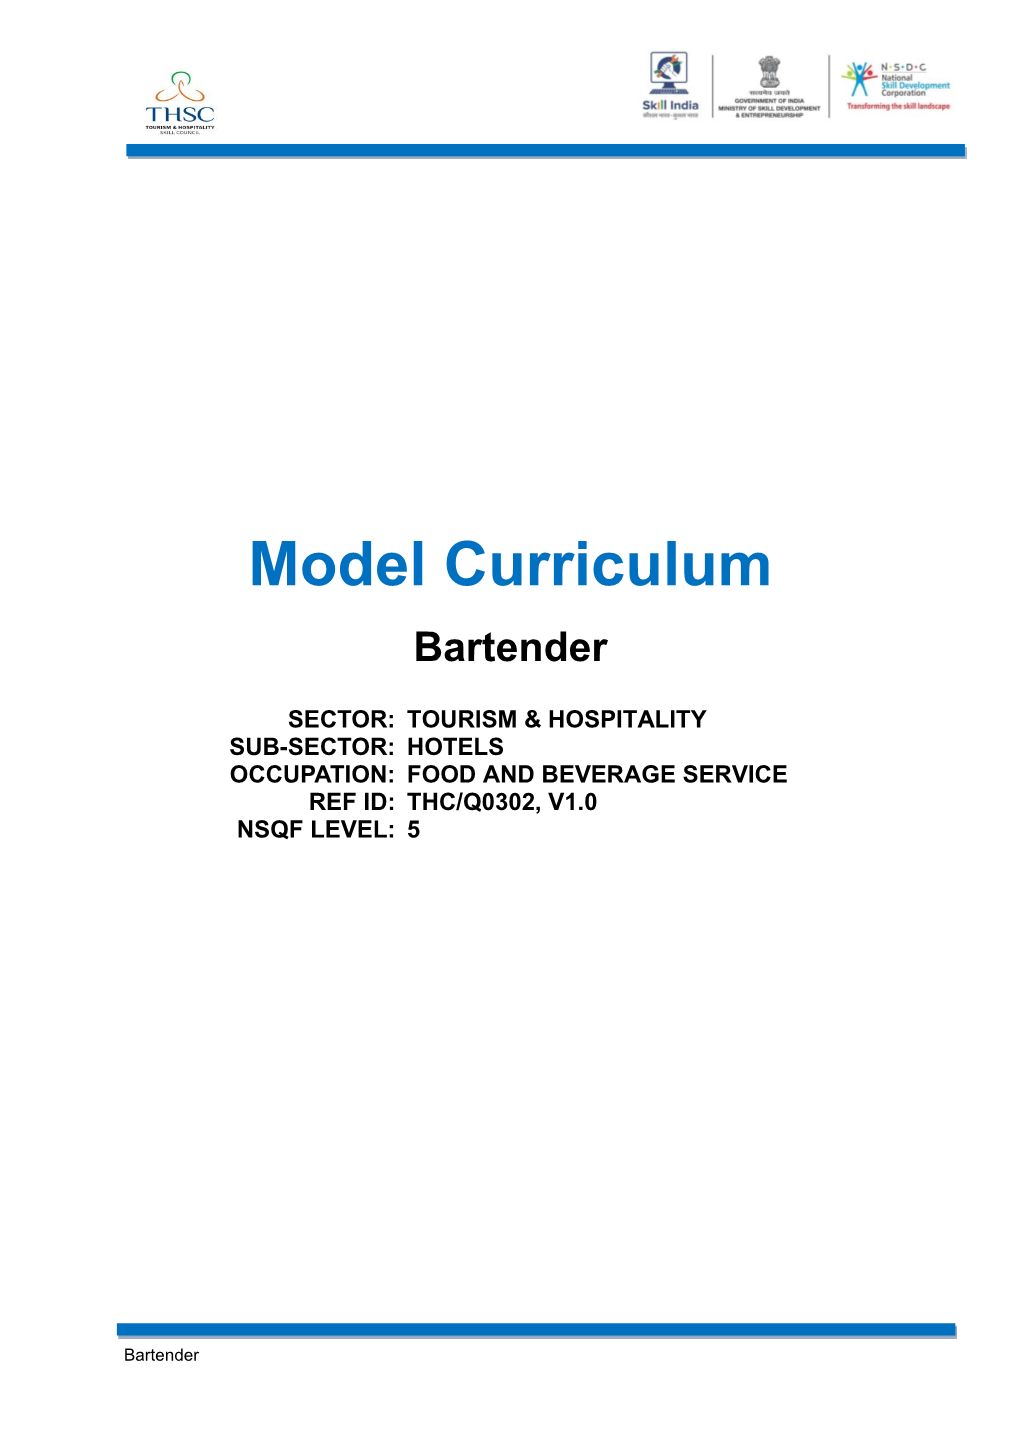 Model Curriculum Bartender